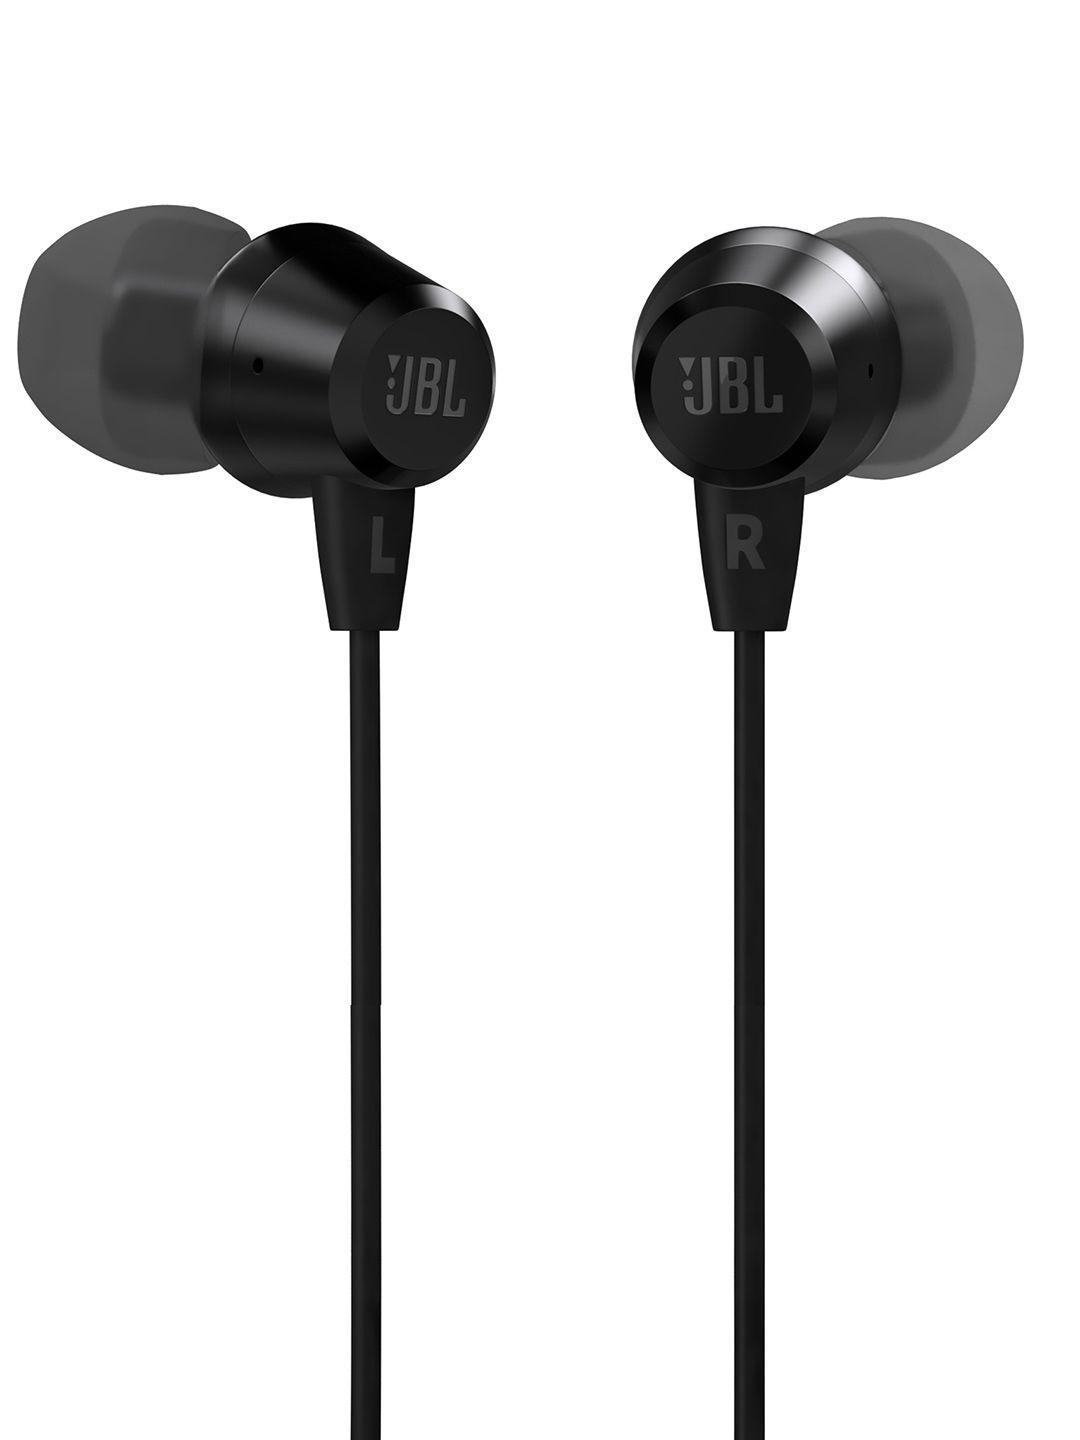 JBL Black C50HI M in-Ear Headphones with Mic JBLC50HIBLK